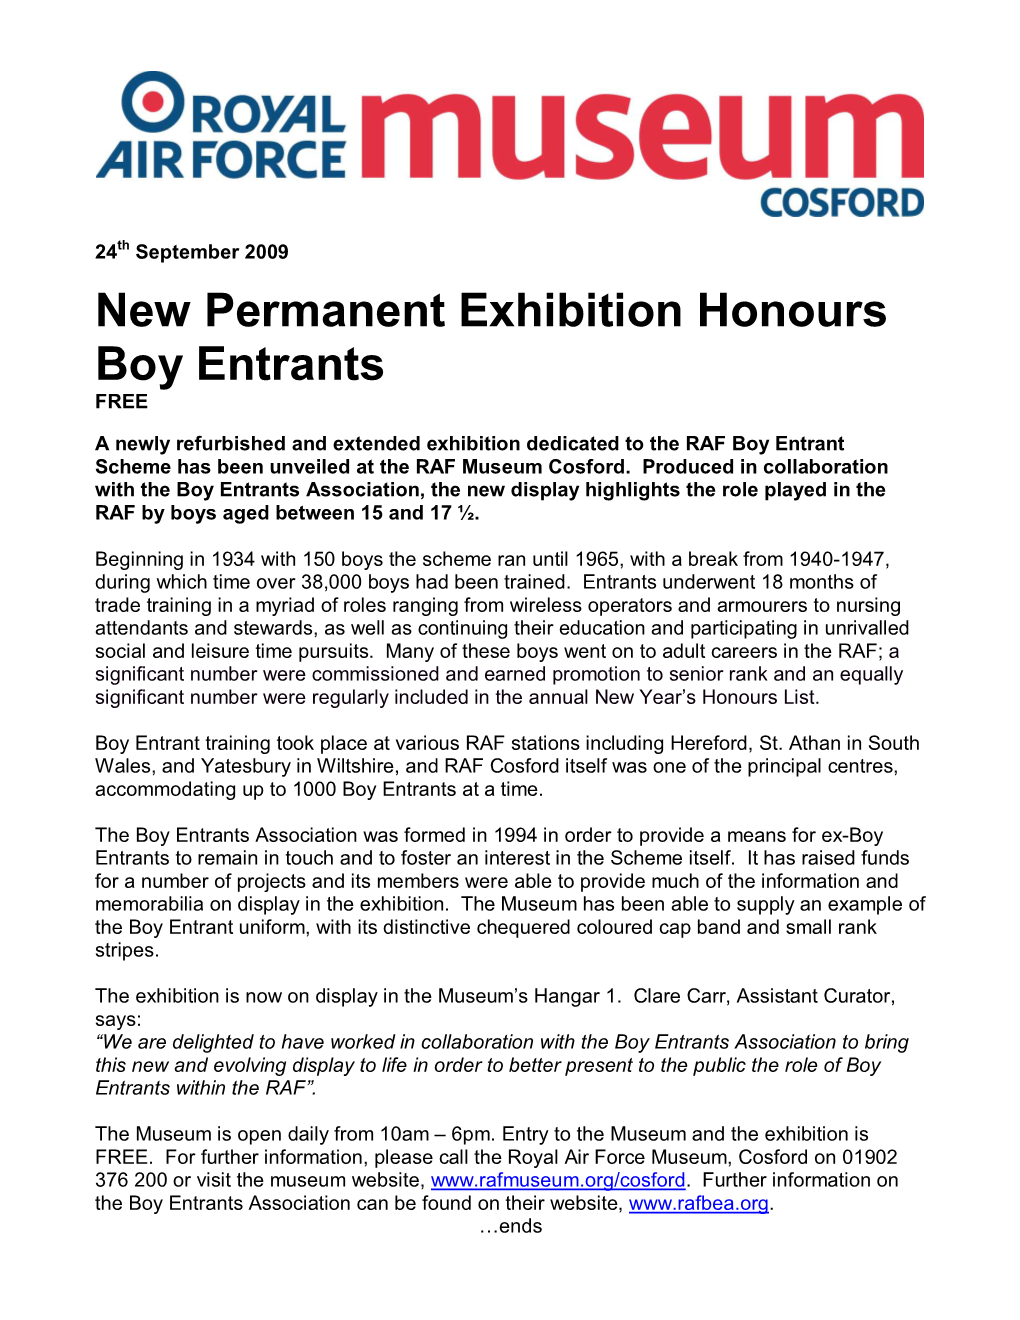 New Permanent Exhibition Honours Boy Entrants FREE